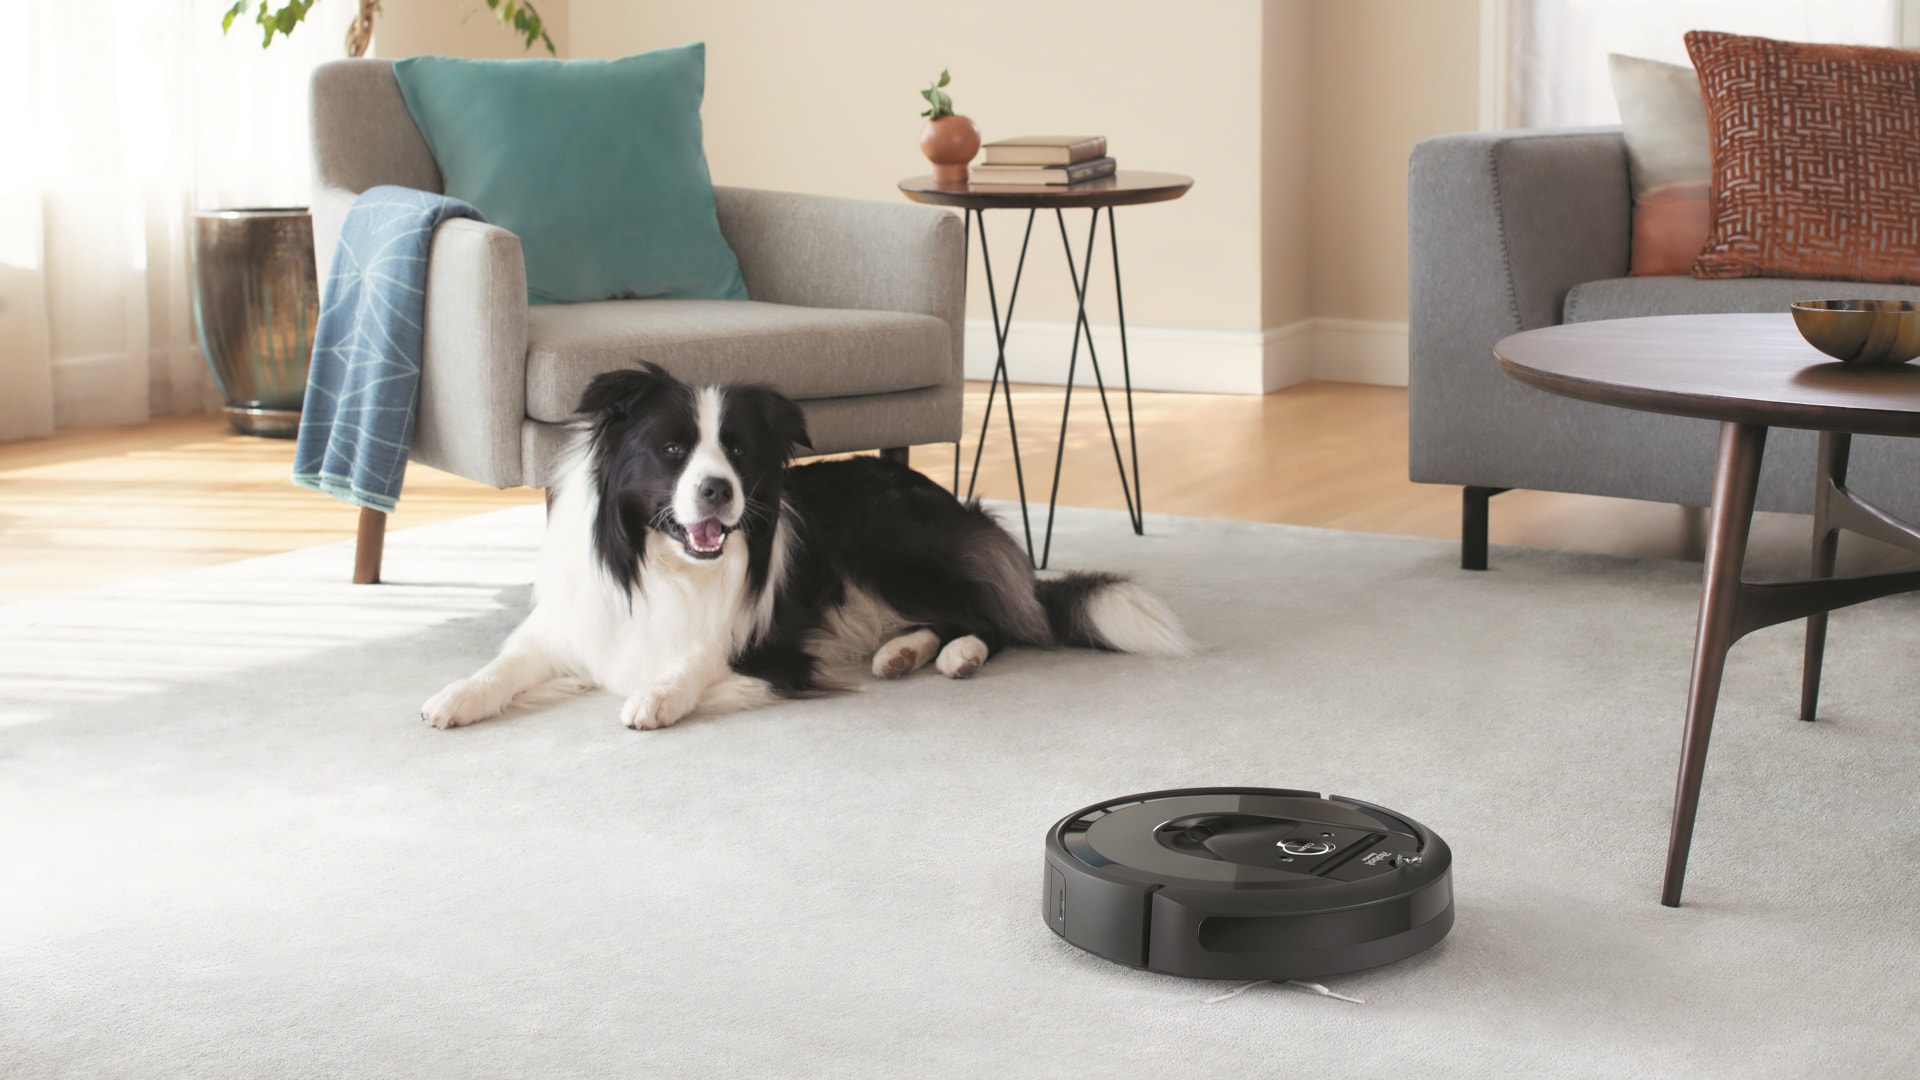 iRobot Roomba Vacuum Dog in Livingroom